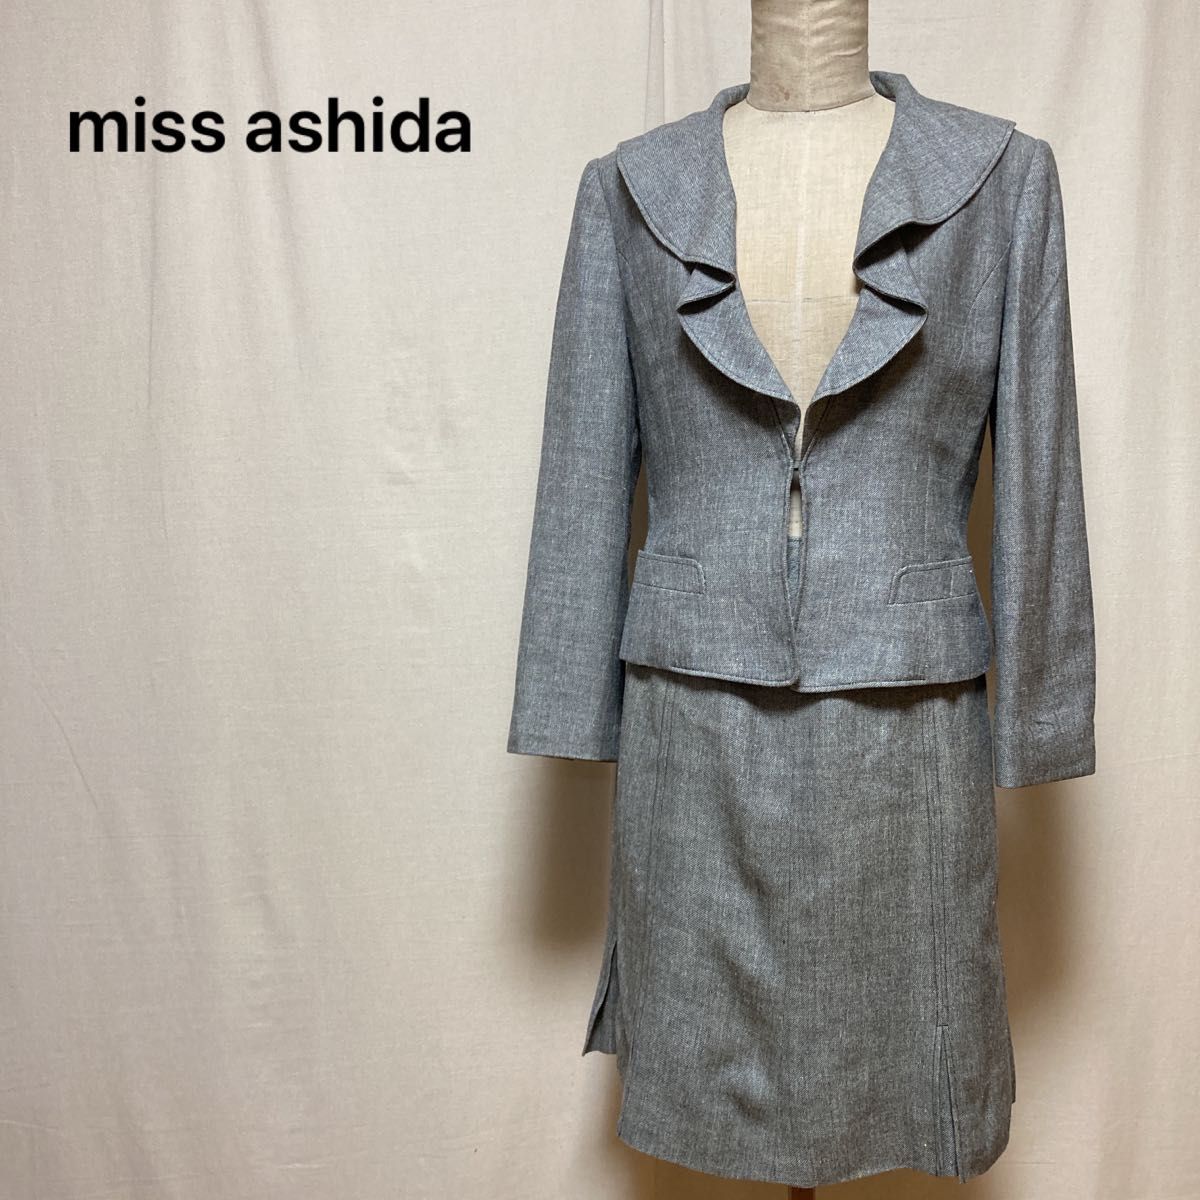 miss ashida ミスアシダ スカートスーツ上下 セットアップ シルク混 リネン混 ウール混 グレー セレモニースーツ